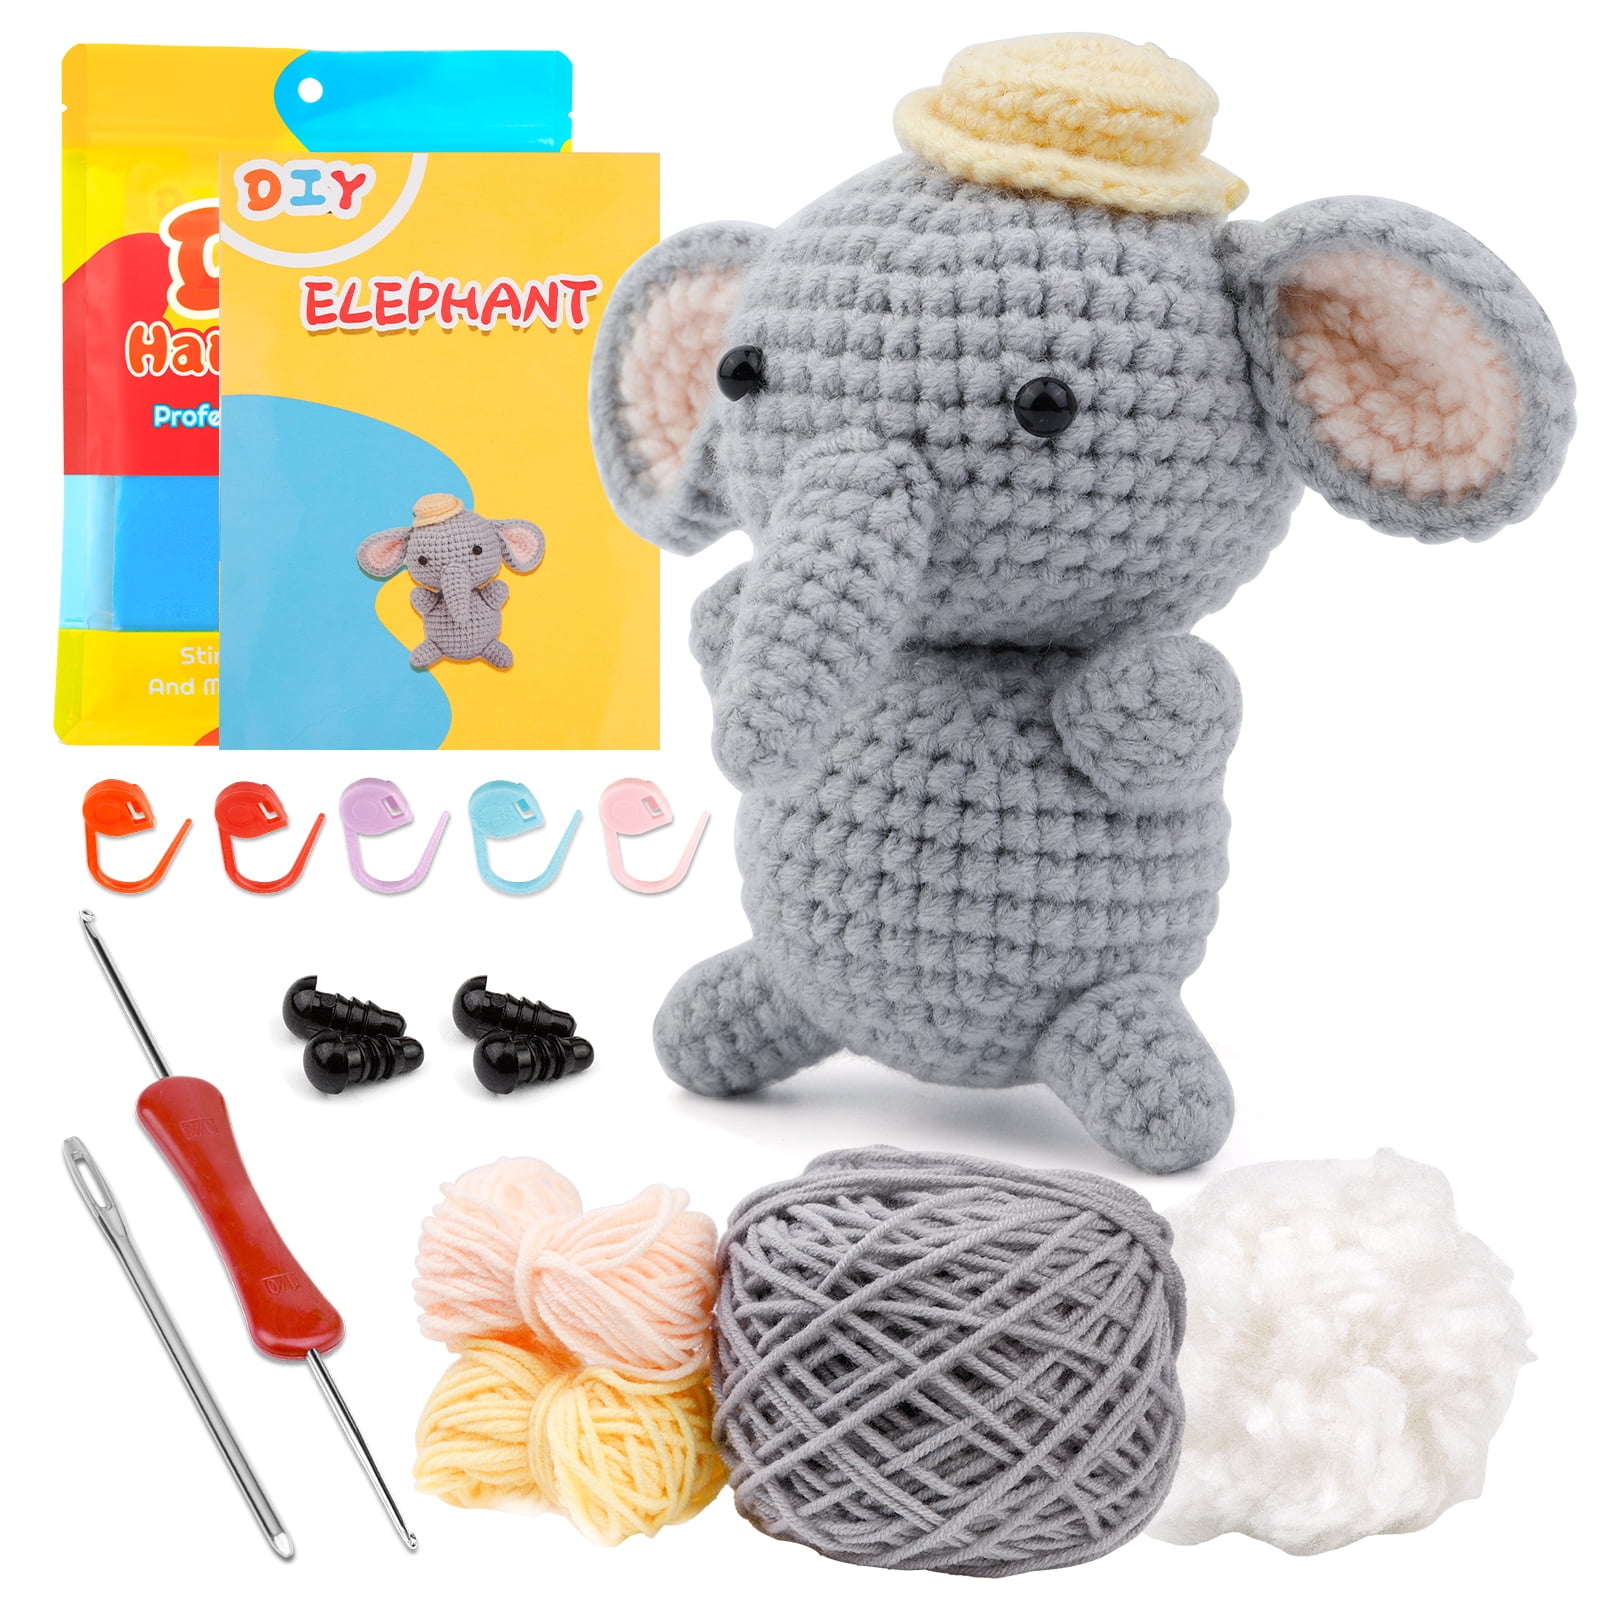 The Woobles Beginner Crochet Amigurumi Kits - Fox 